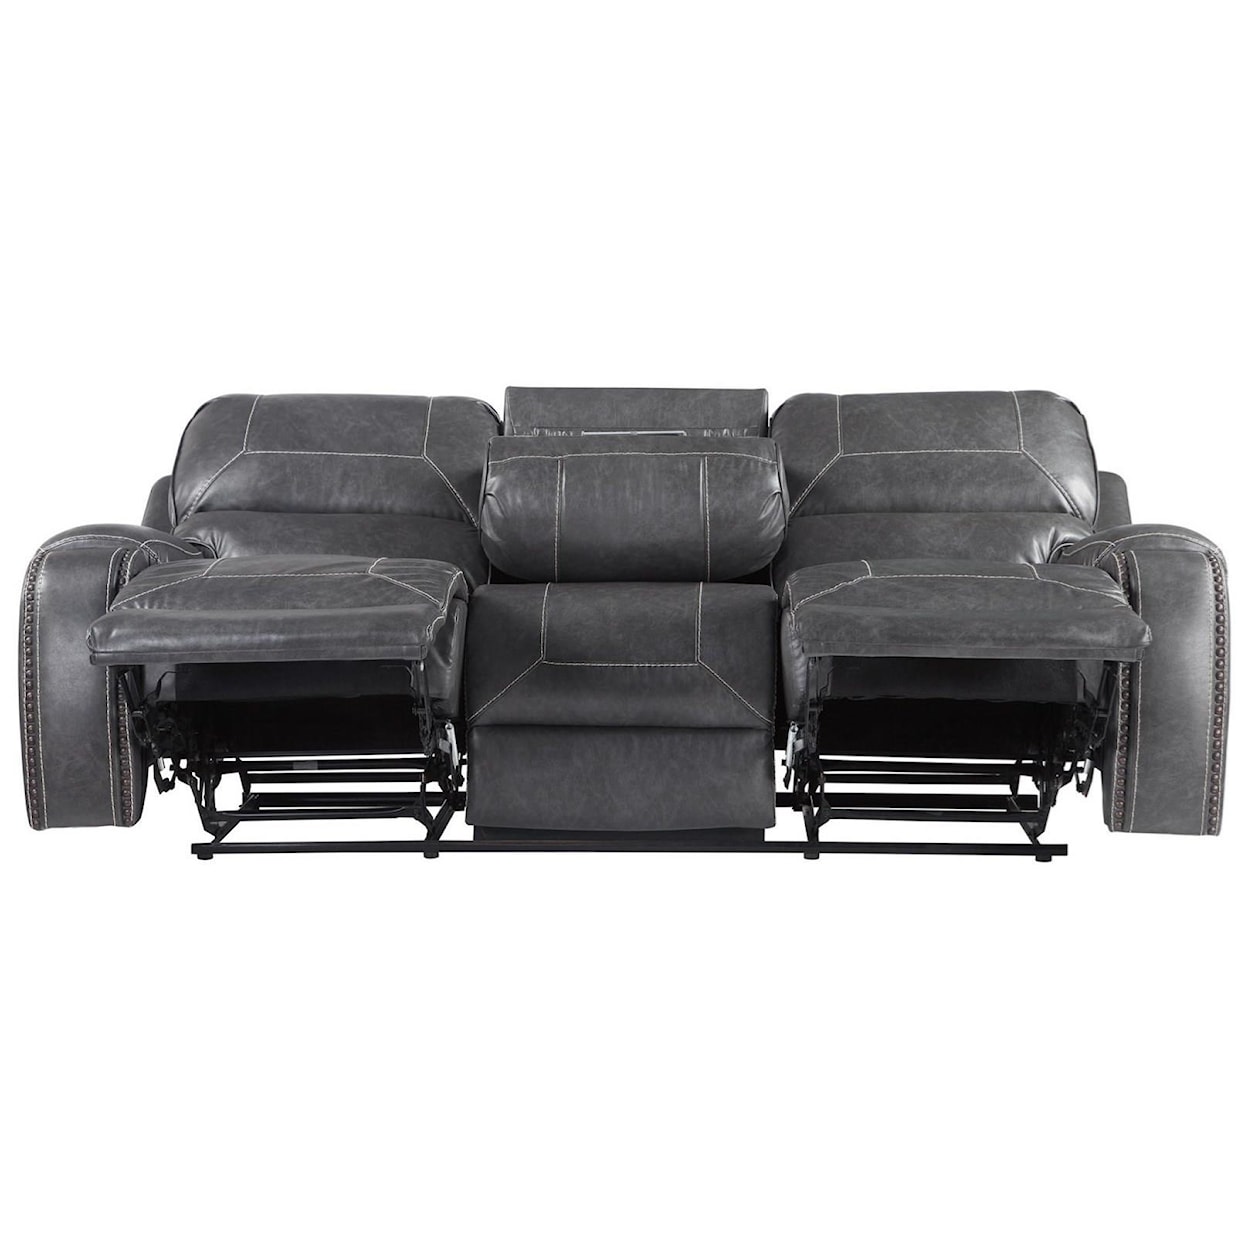 Prime Keily Manual Motion Recliner Sofa